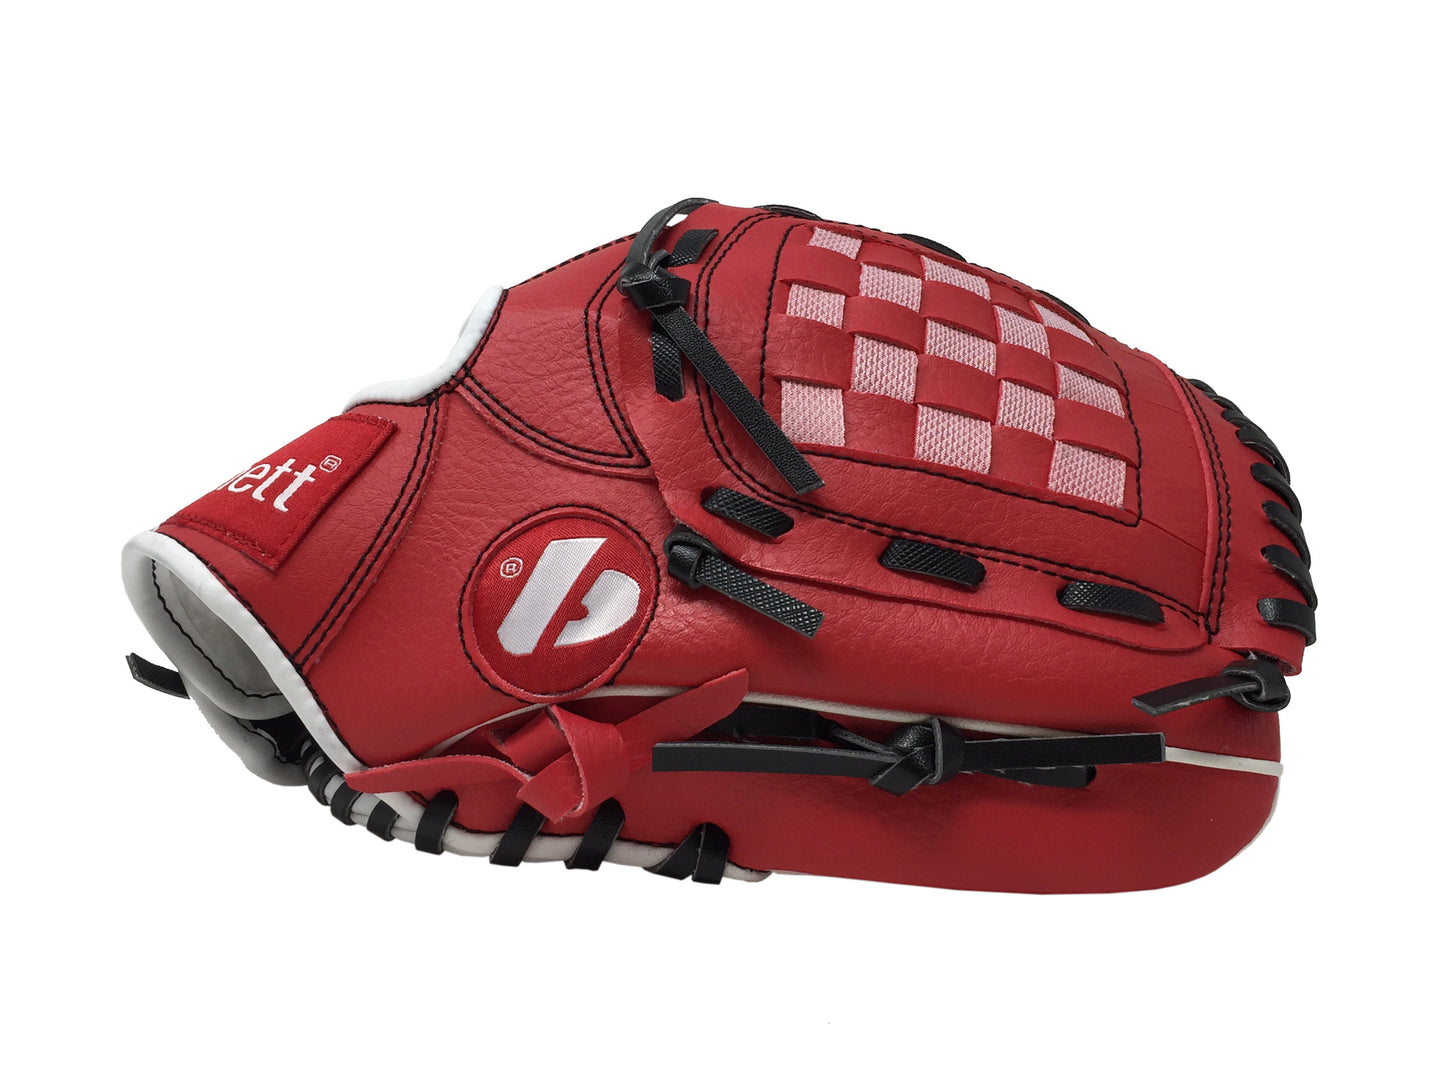 JL-105, REG baseball glove, outfield, polyurethane, size 10,5", RED